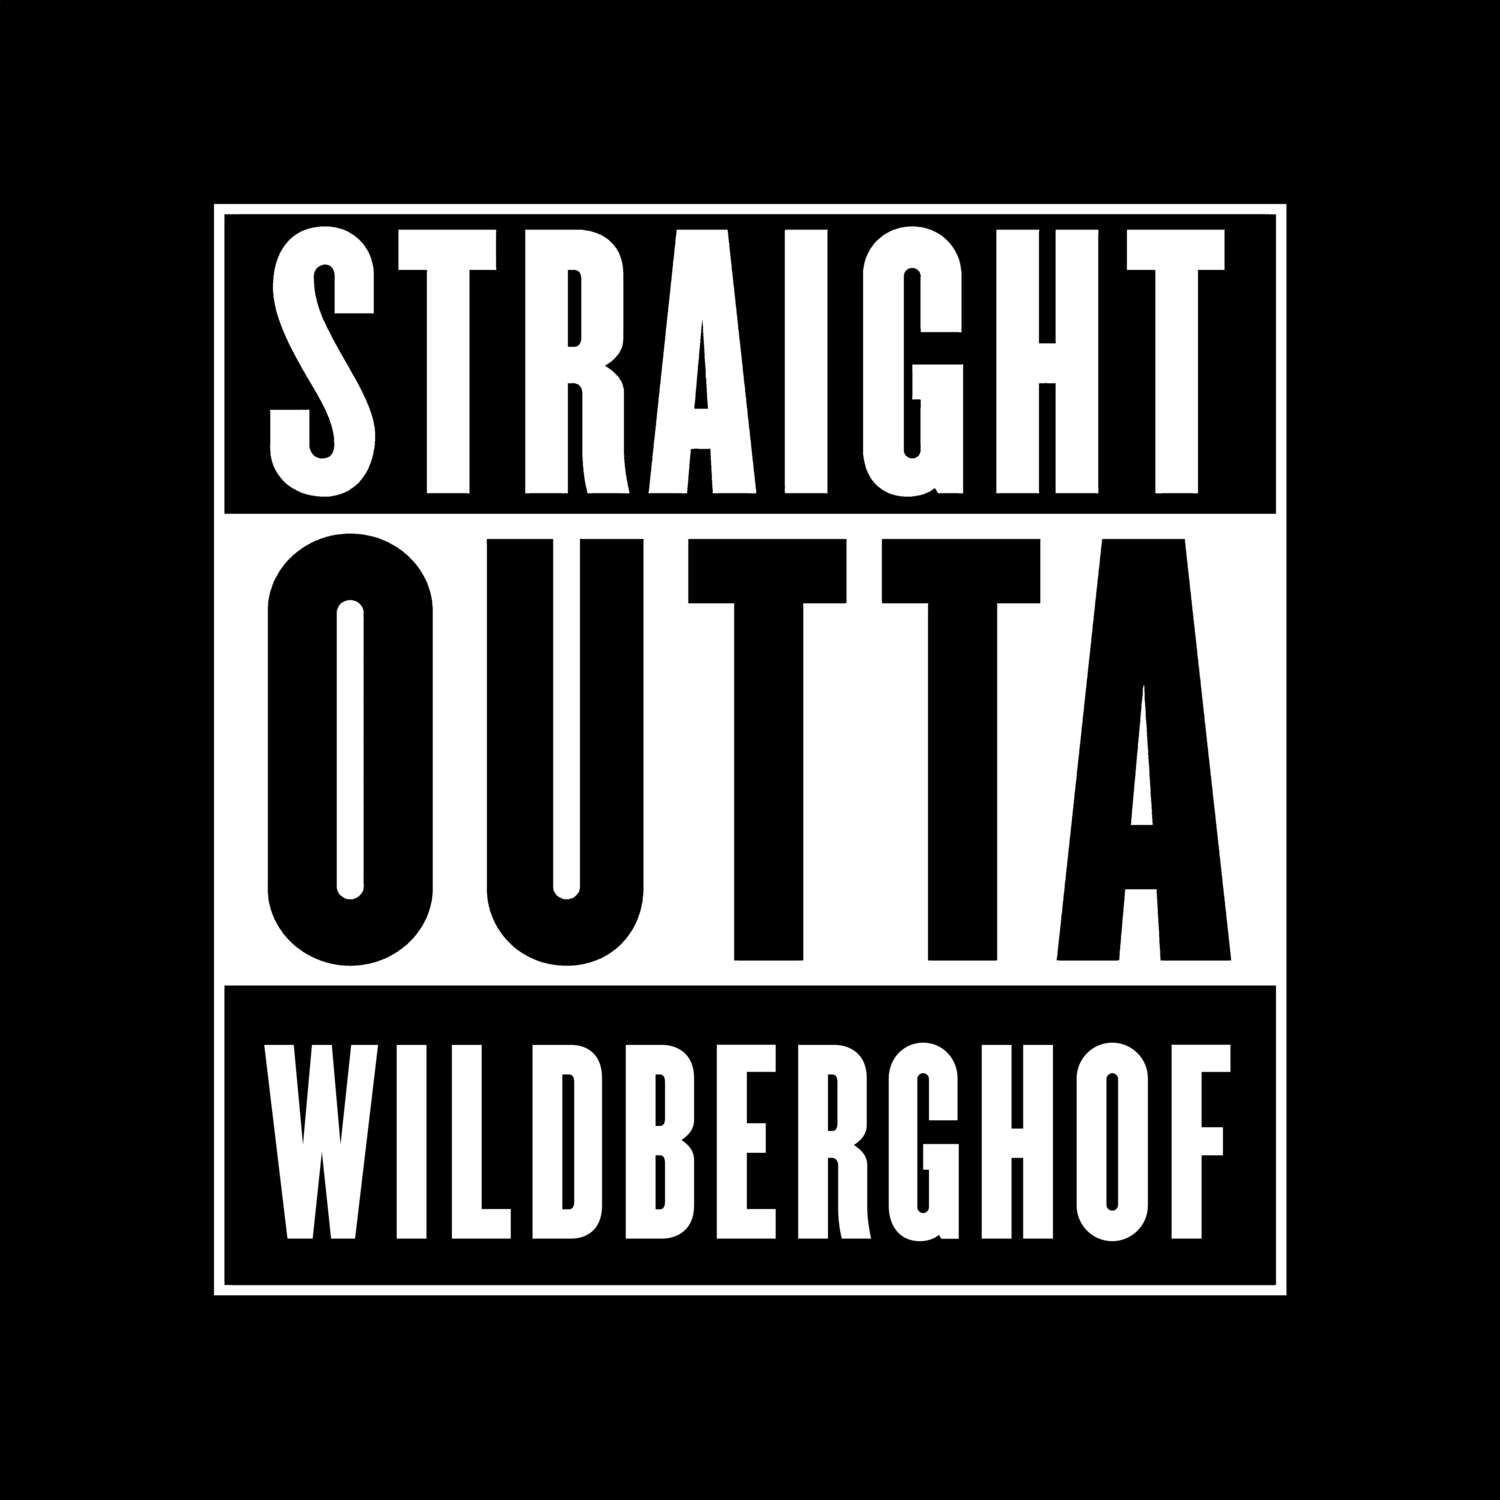 Wildberghof T-Shirt »Straight Outta«